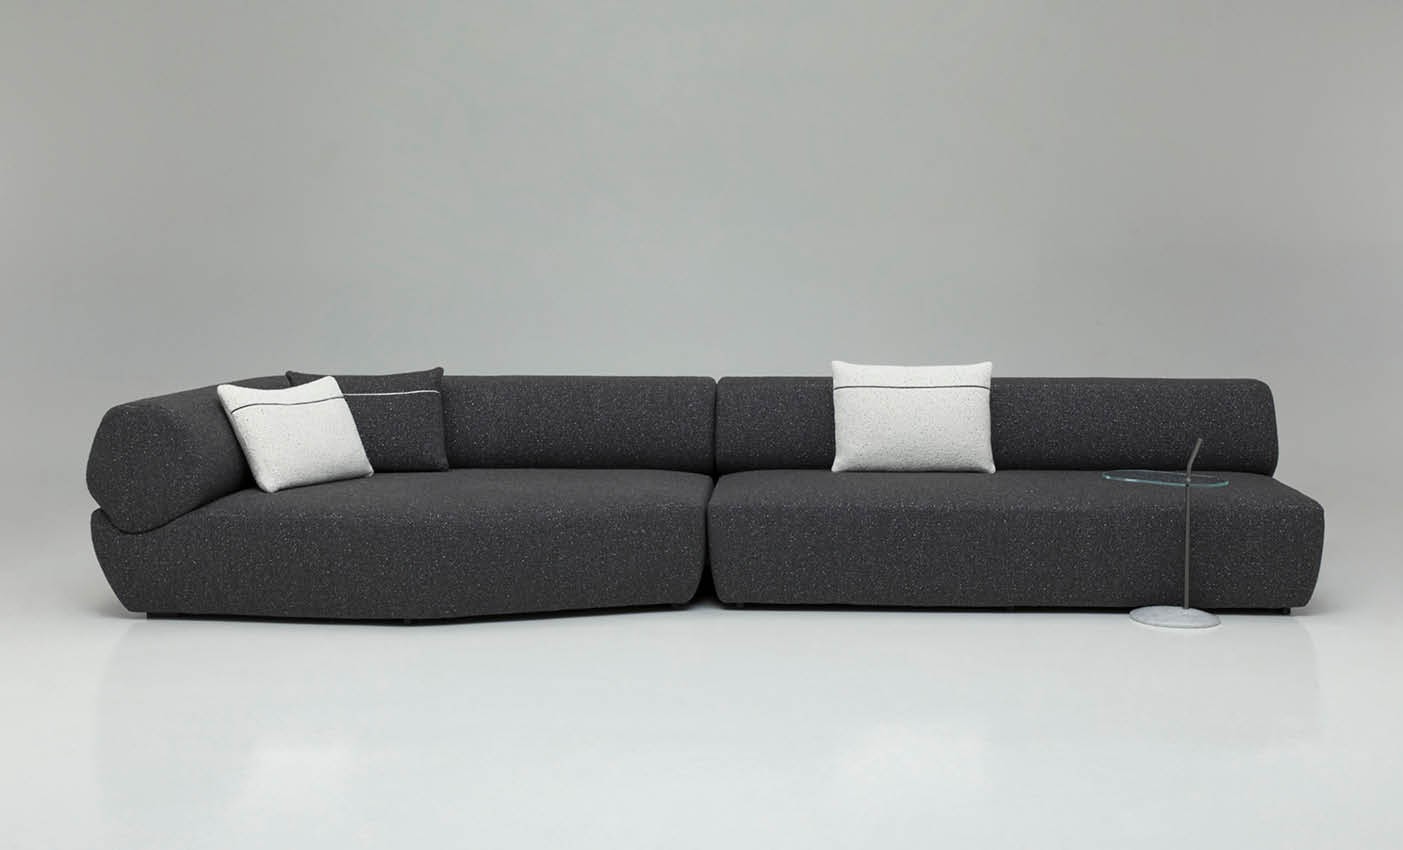 new Naviglio sofa presente by B&B Italia during Milan design city 2020